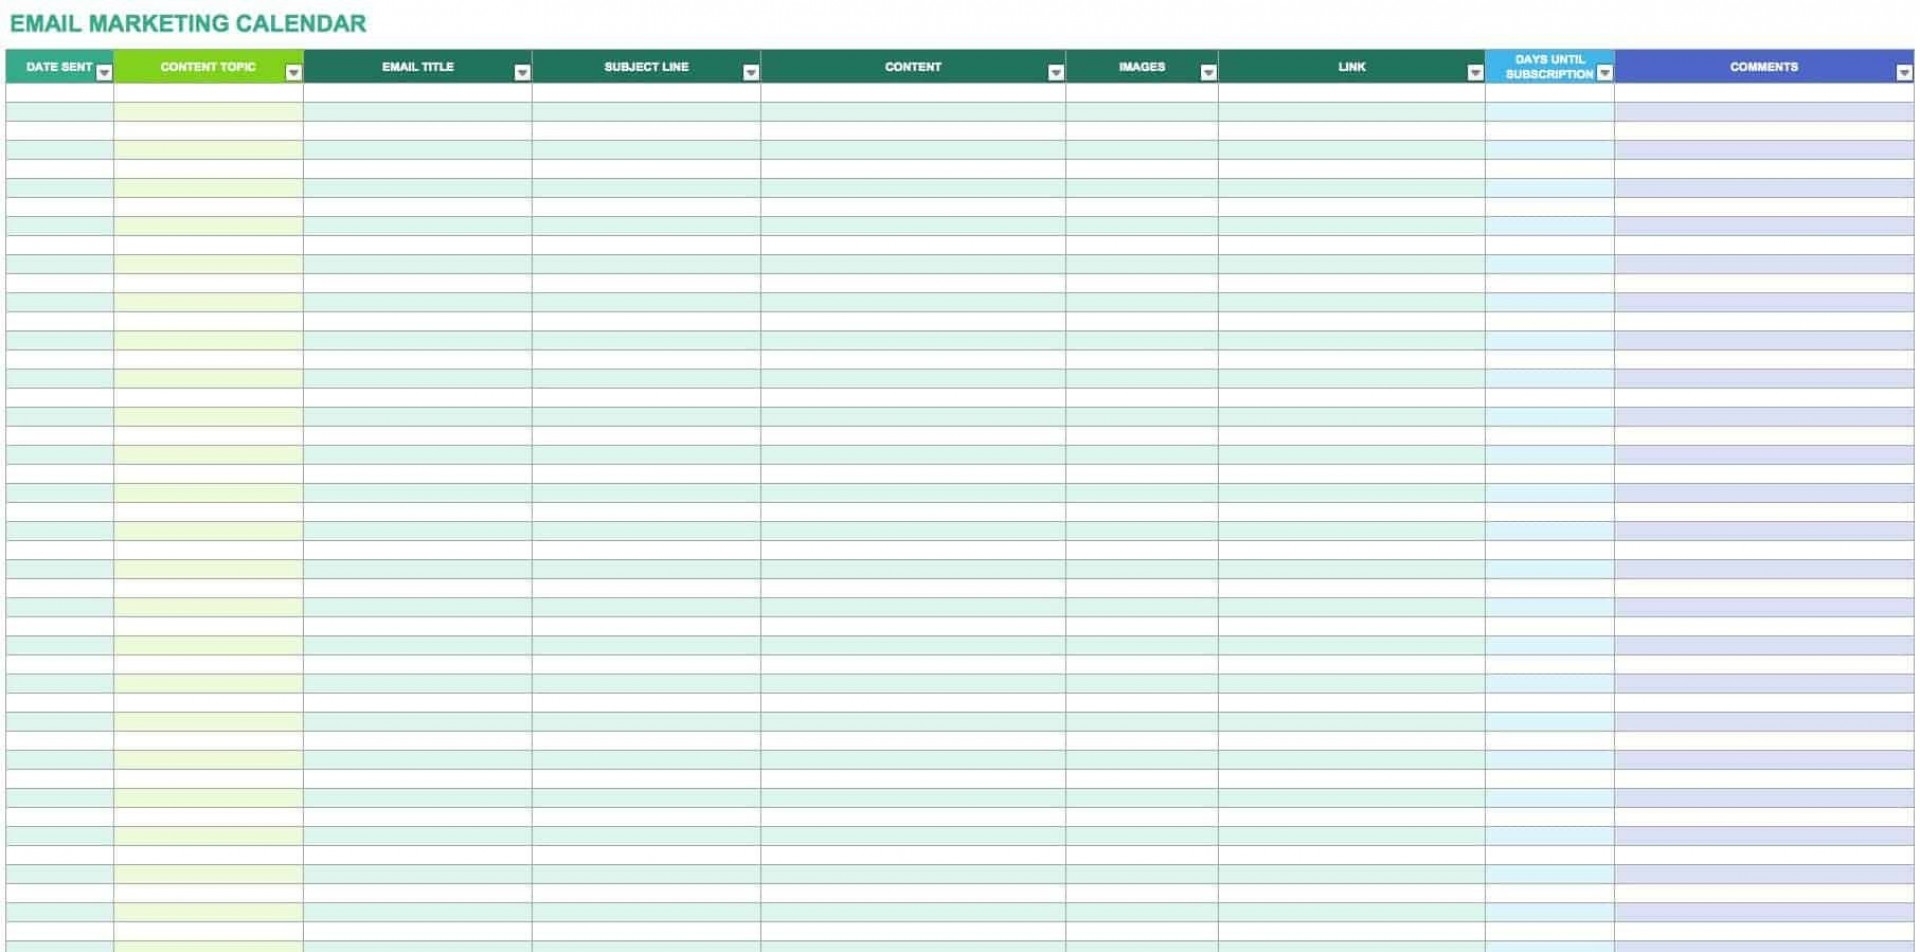 52 Week Calendar Template Excel ~ Addictionary